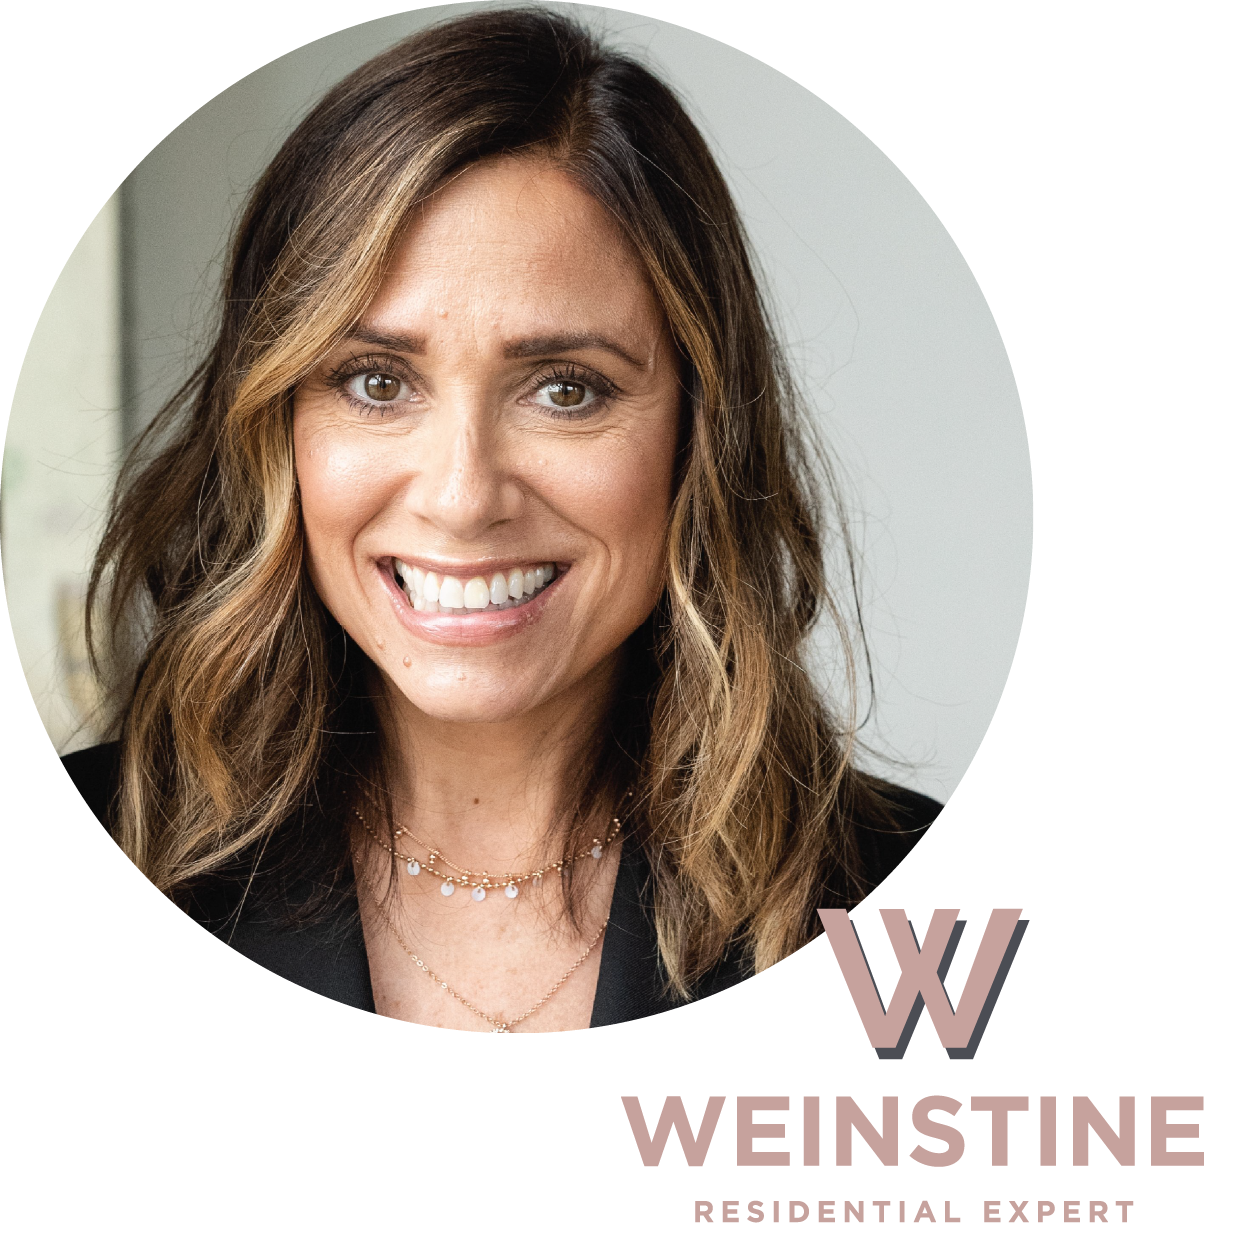 Holly Weinstine - Residential Expert